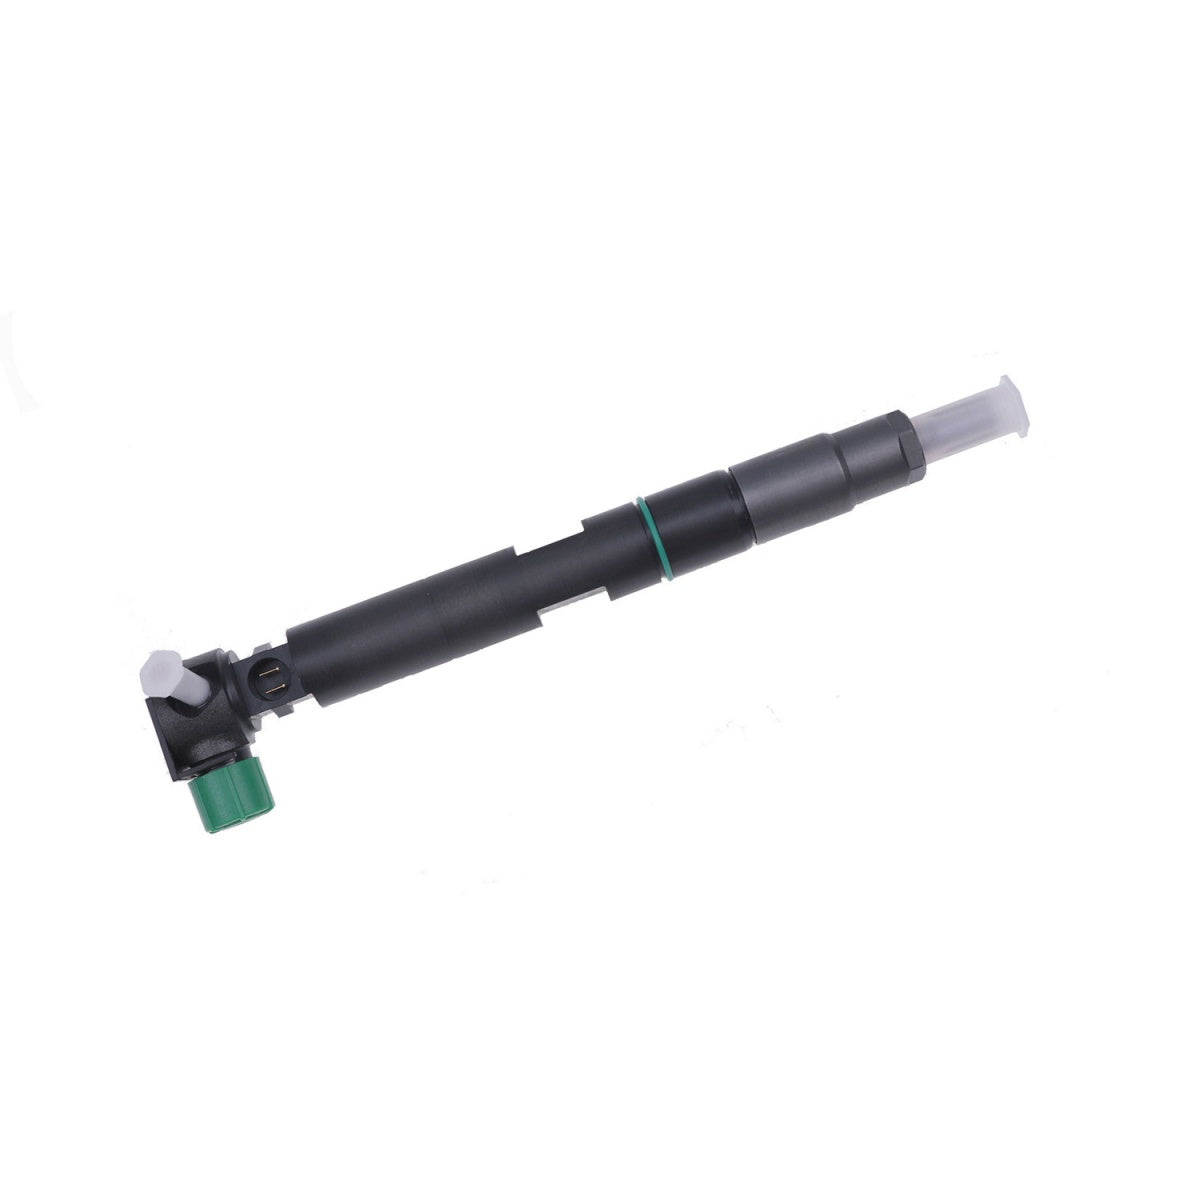 Fuel Injector For Bobcat Loader, Daysyore Fuel Injector, Car Fuel Injector, Auto Fuel Injector